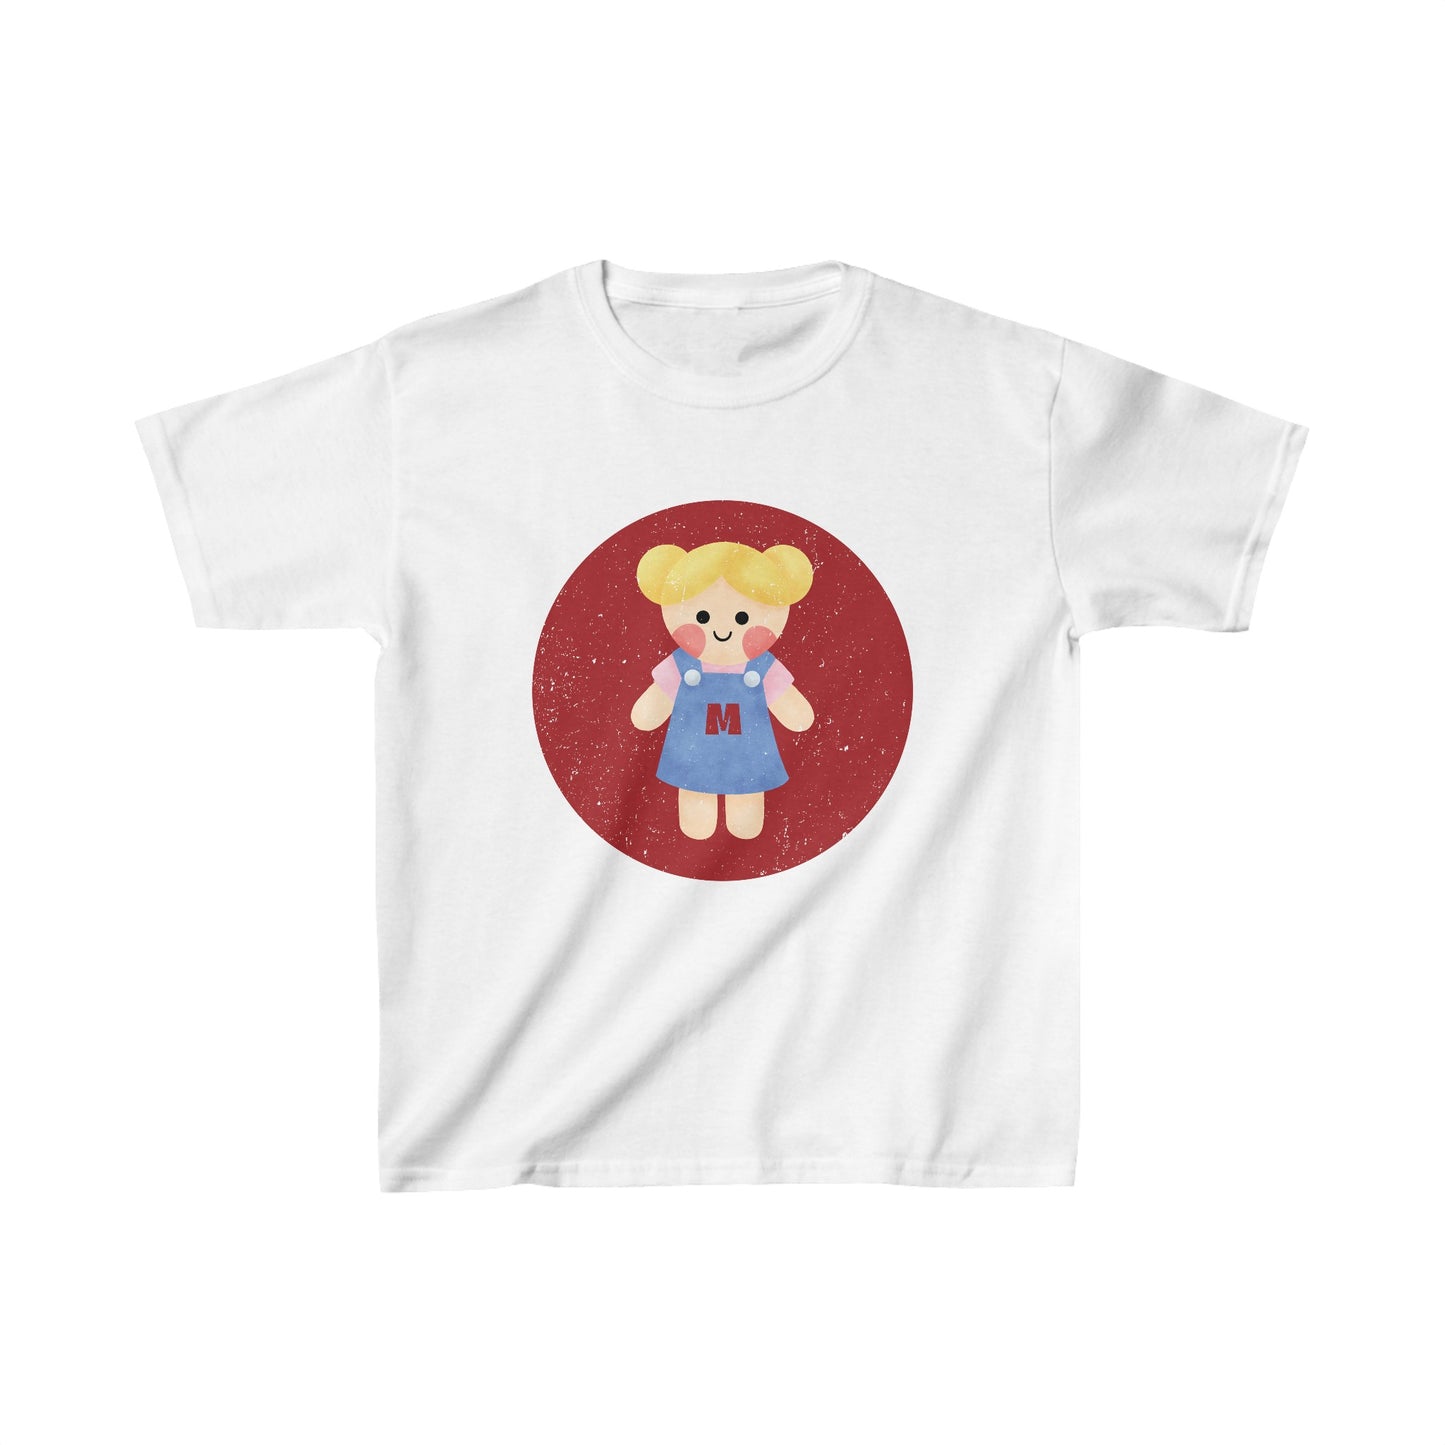 Kids' rag doll T-shirt